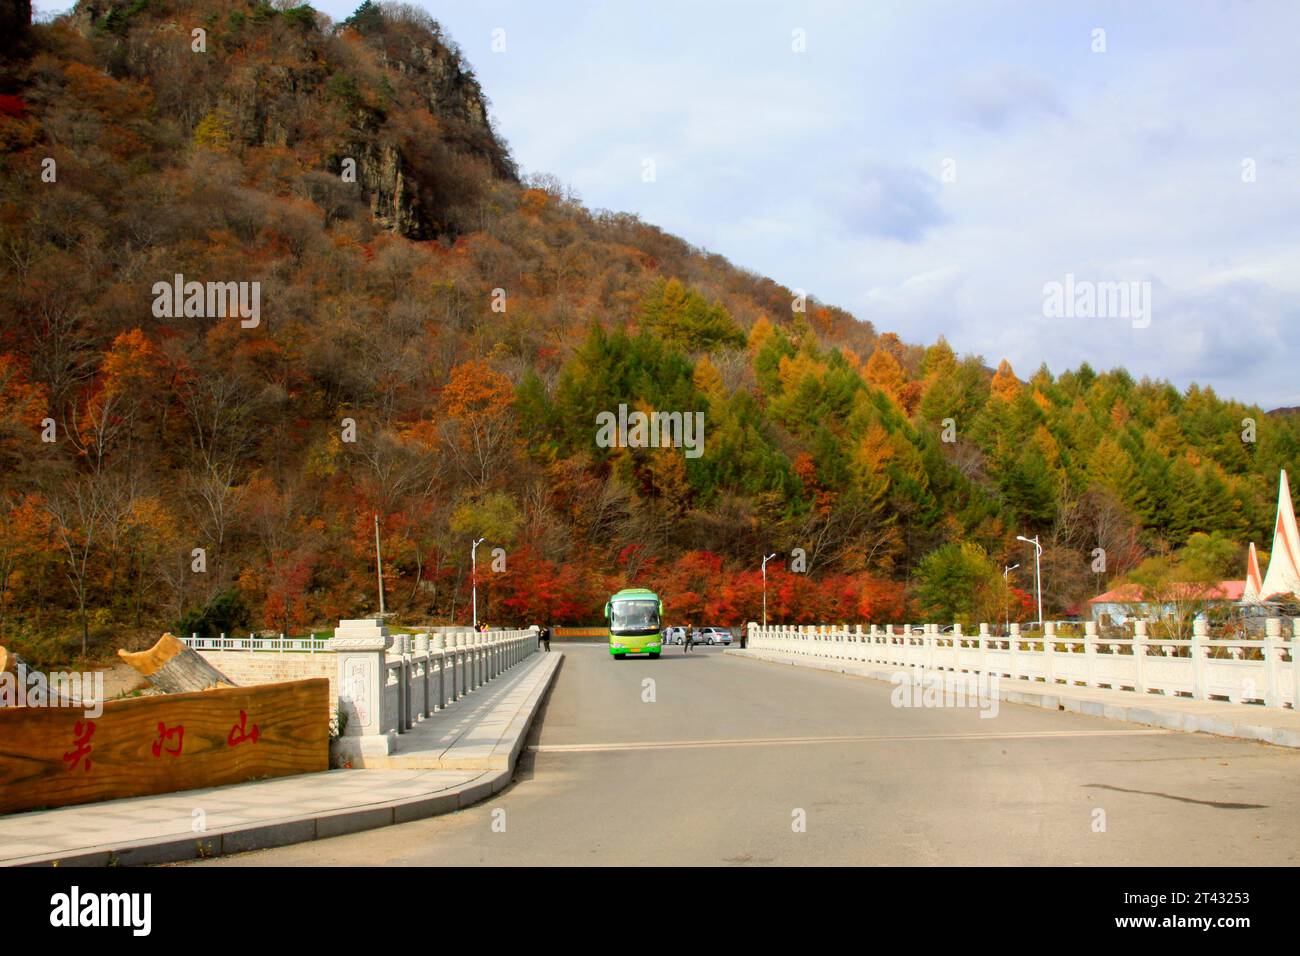 BENXI-STADT - 12. OKTOBER: Tour-Busse fahren in GuanMenShan Scenic, am 12. oktober 2014, Benxi-Stadt, Provinz Liaoning, China Stockfoto